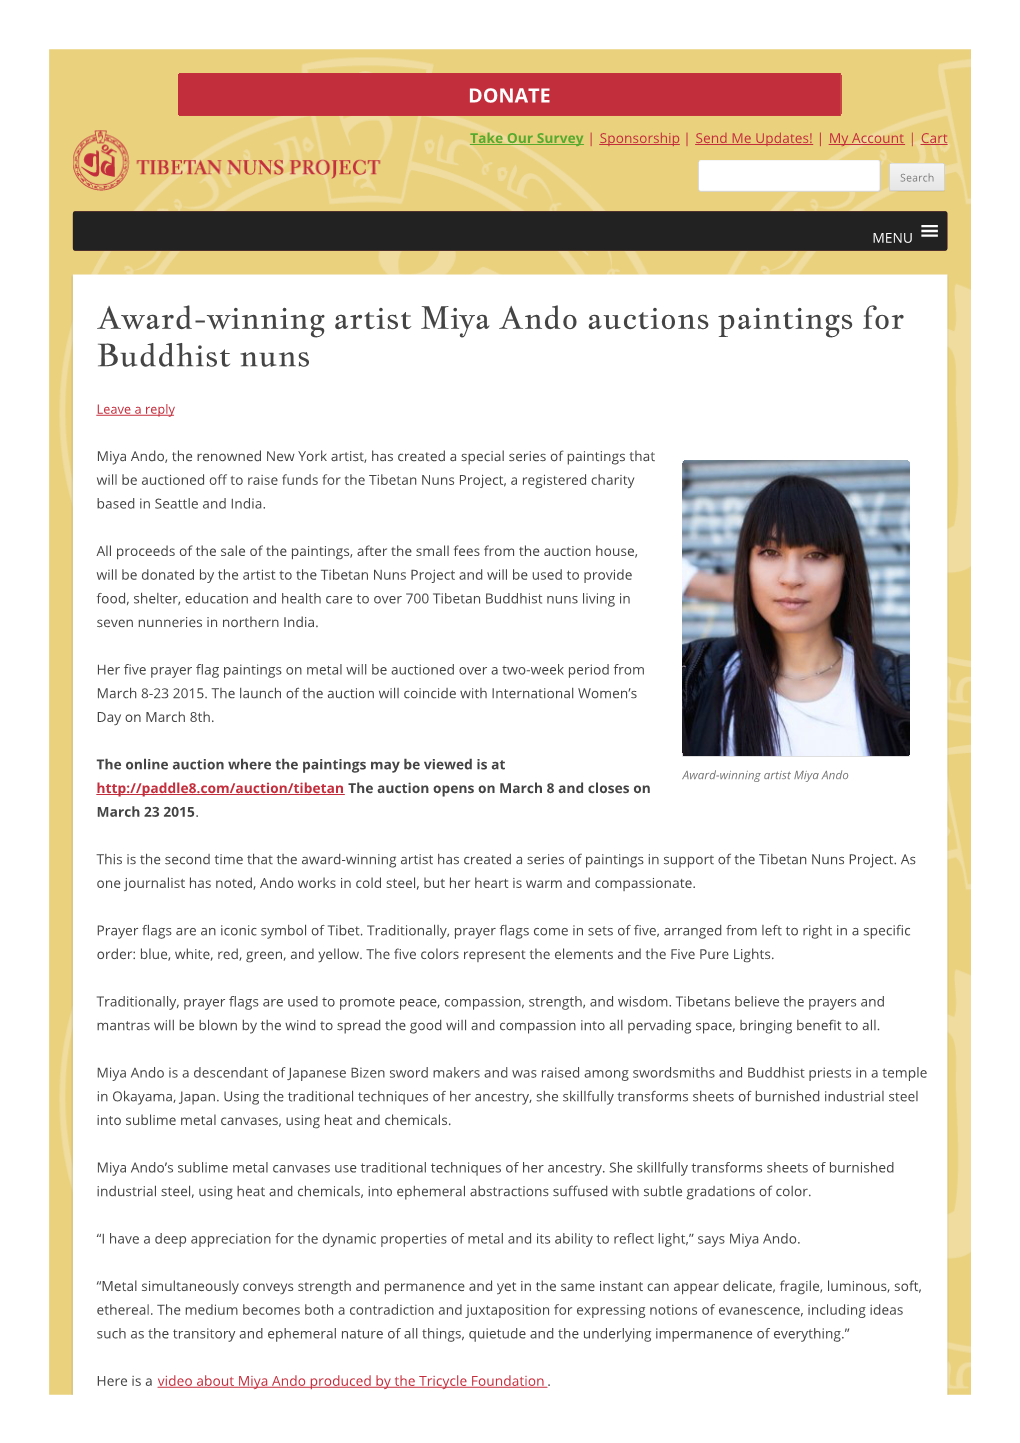 Award-Winning Artist Miya Ando Auctions Paintings for Buddhist Nuns